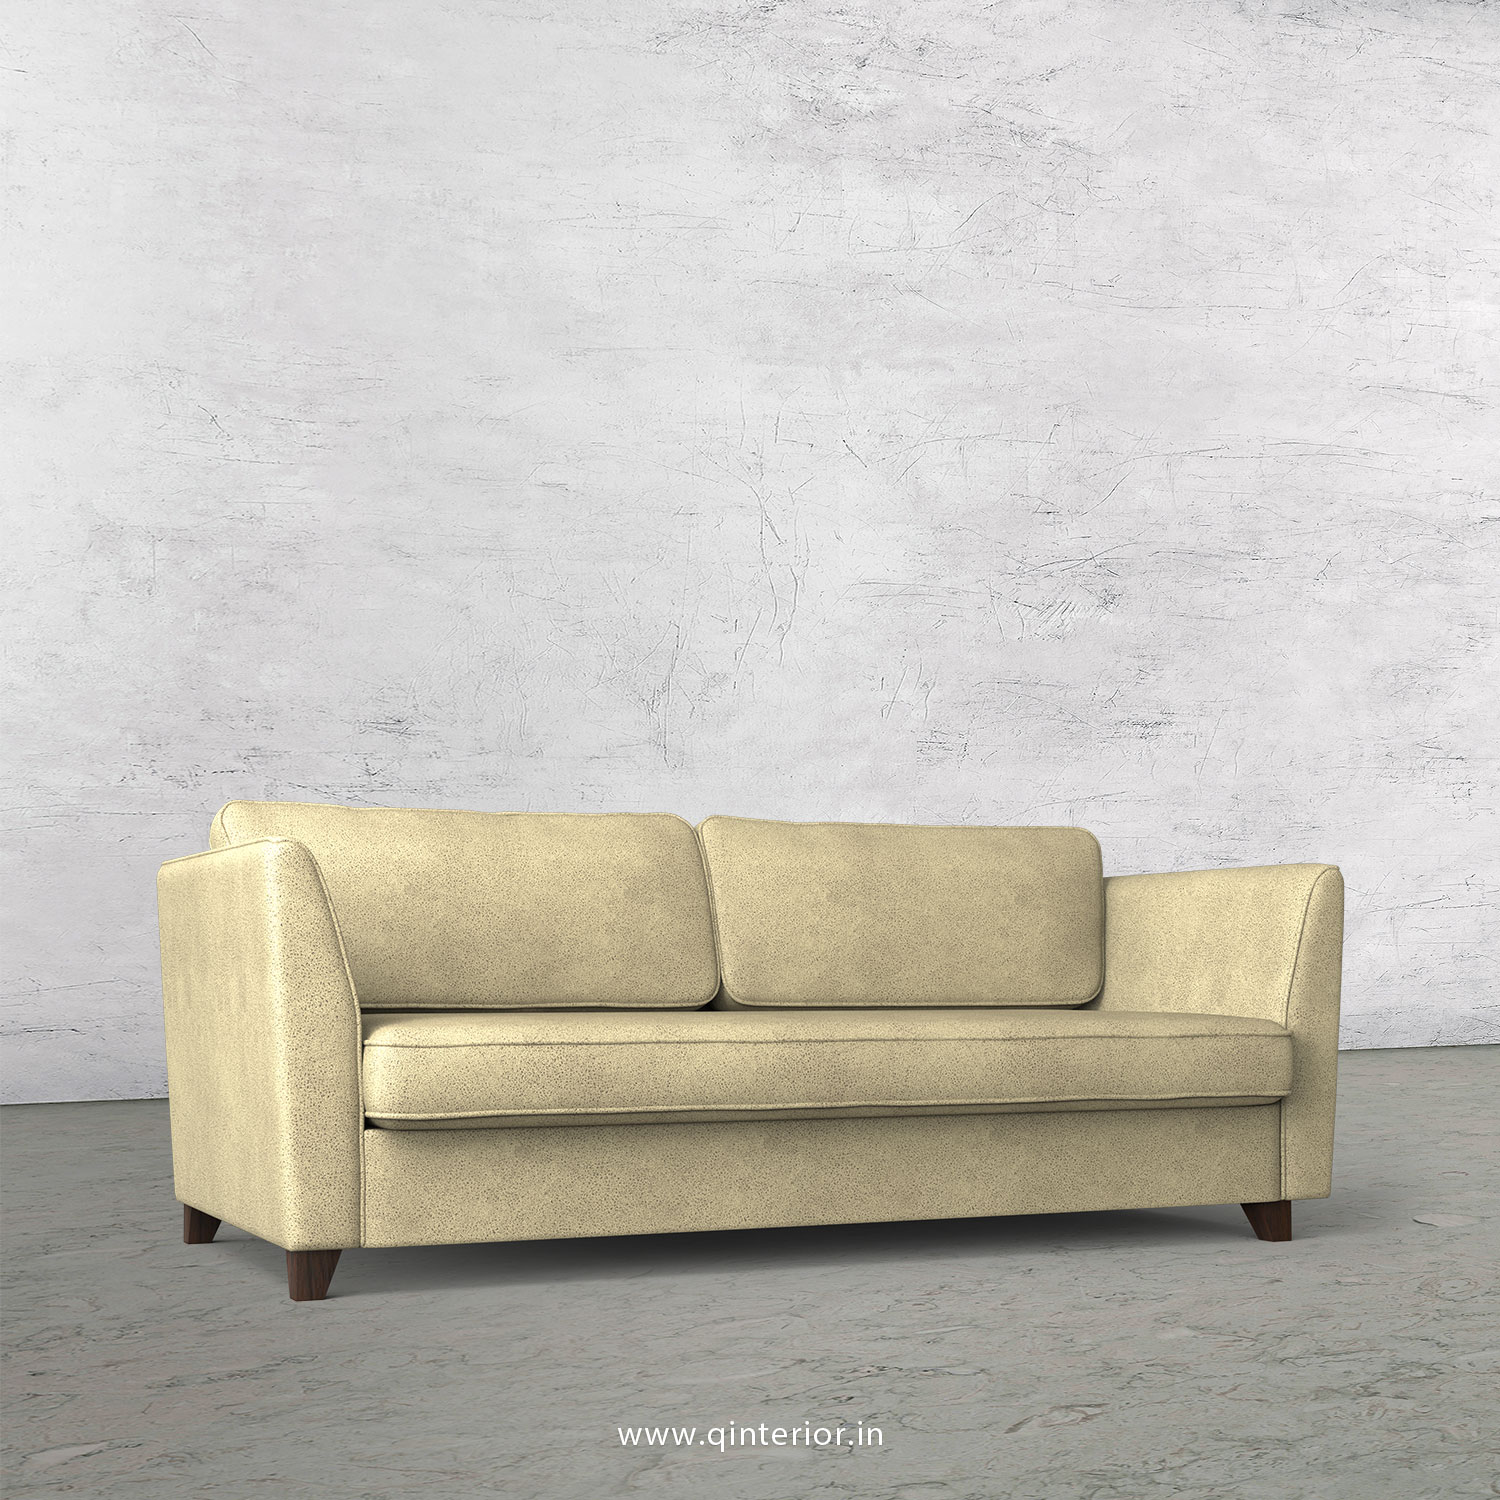 KINGSTONE 3 Seater Sofa in Fab Leather Fabric - SFA004 FL10